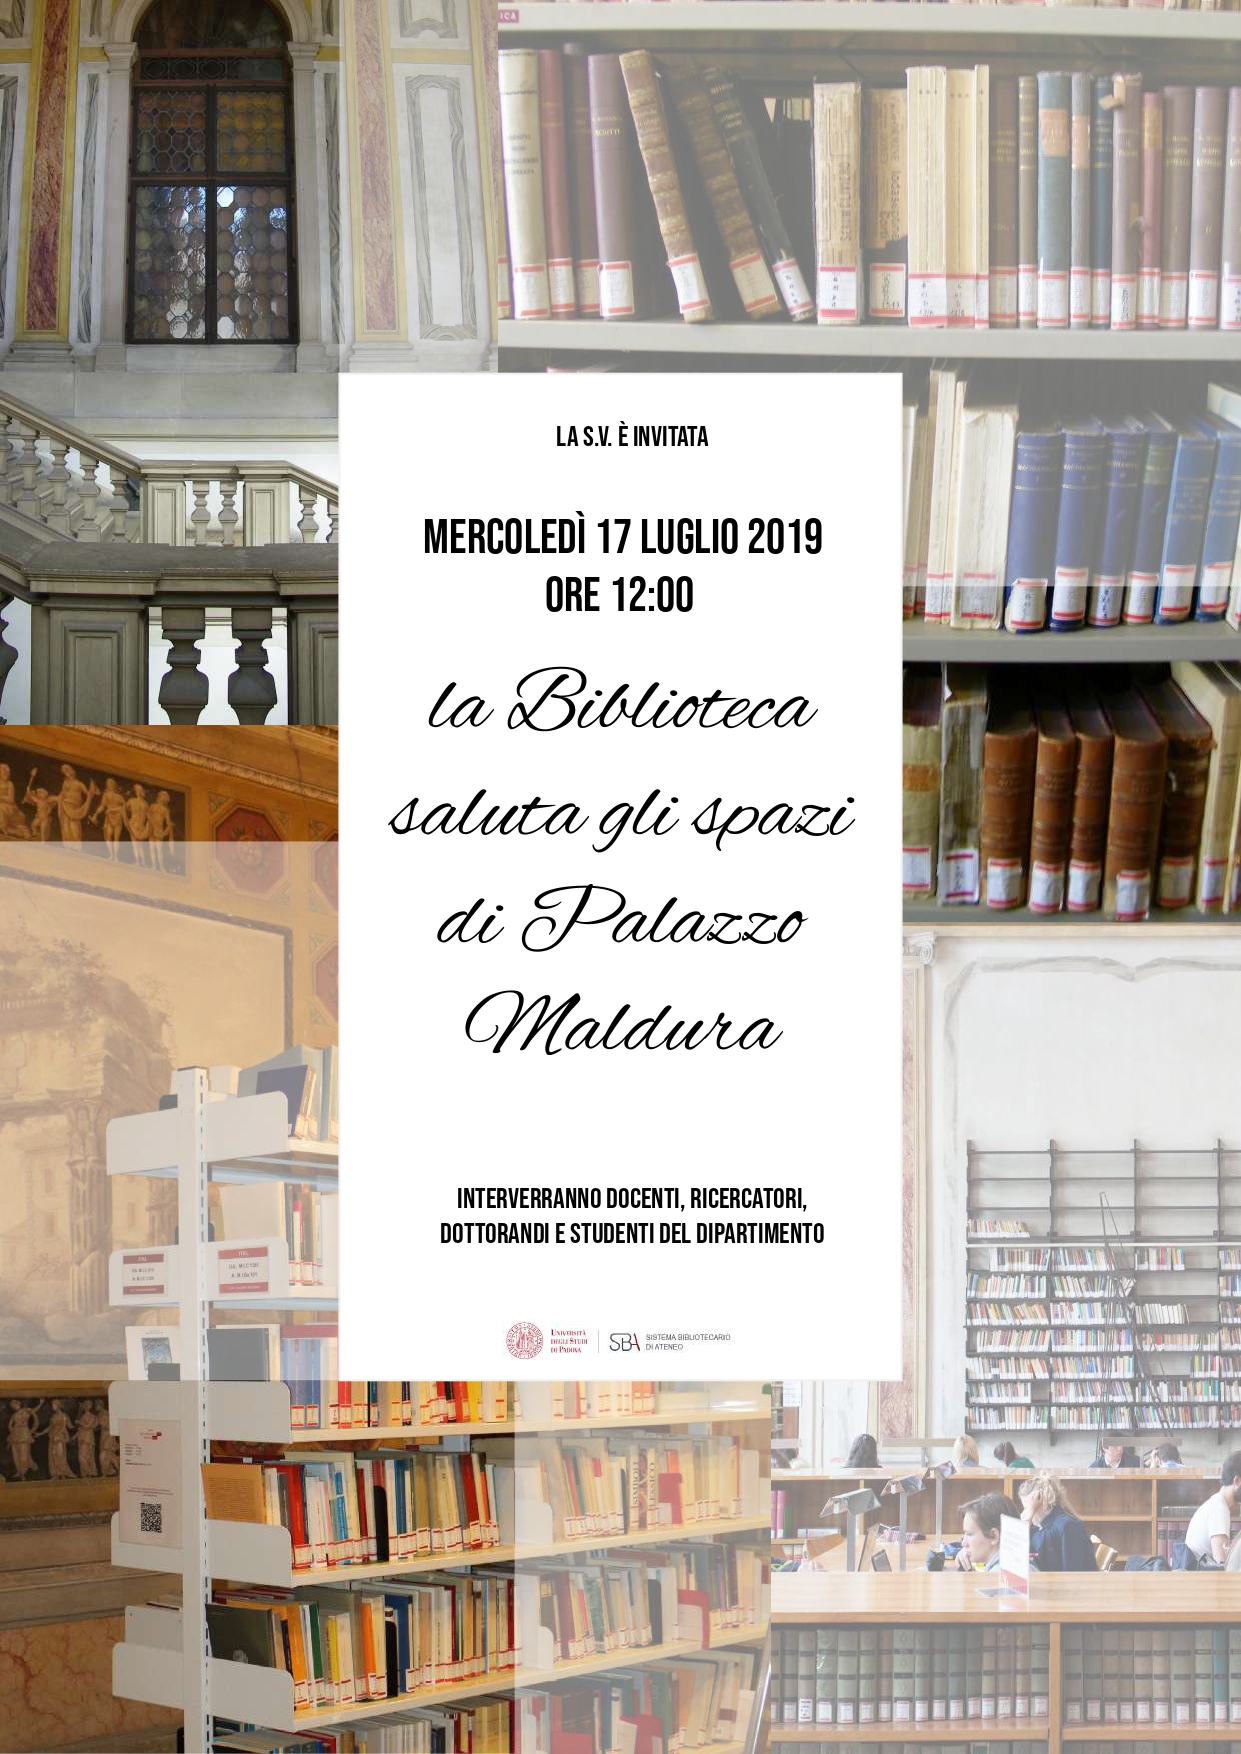 Congedo Biblioteca Maldura